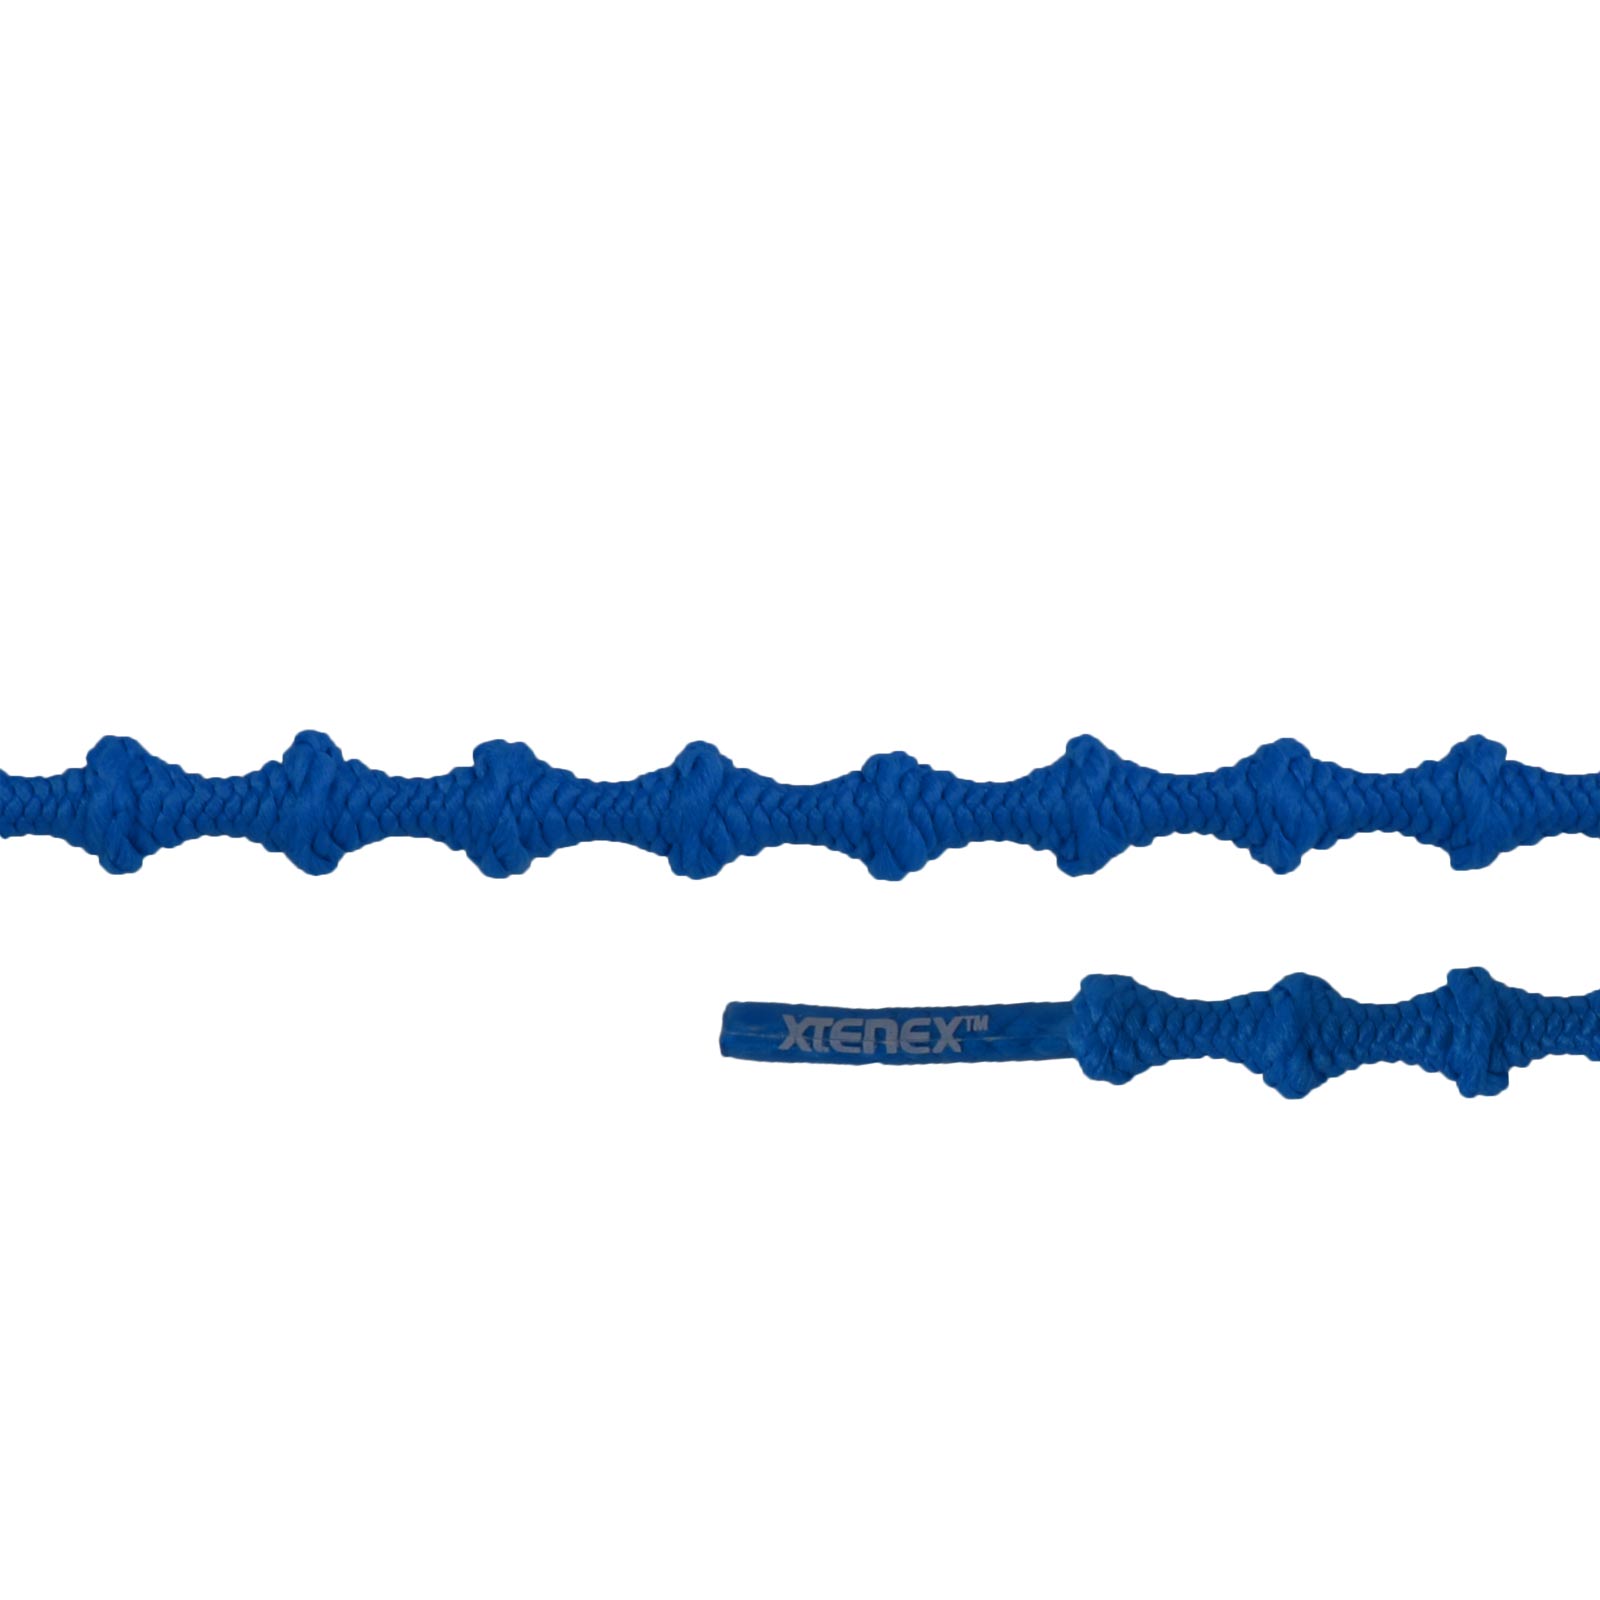 Productfoto van Xtenex Sport Veters - 75cm - royal blue